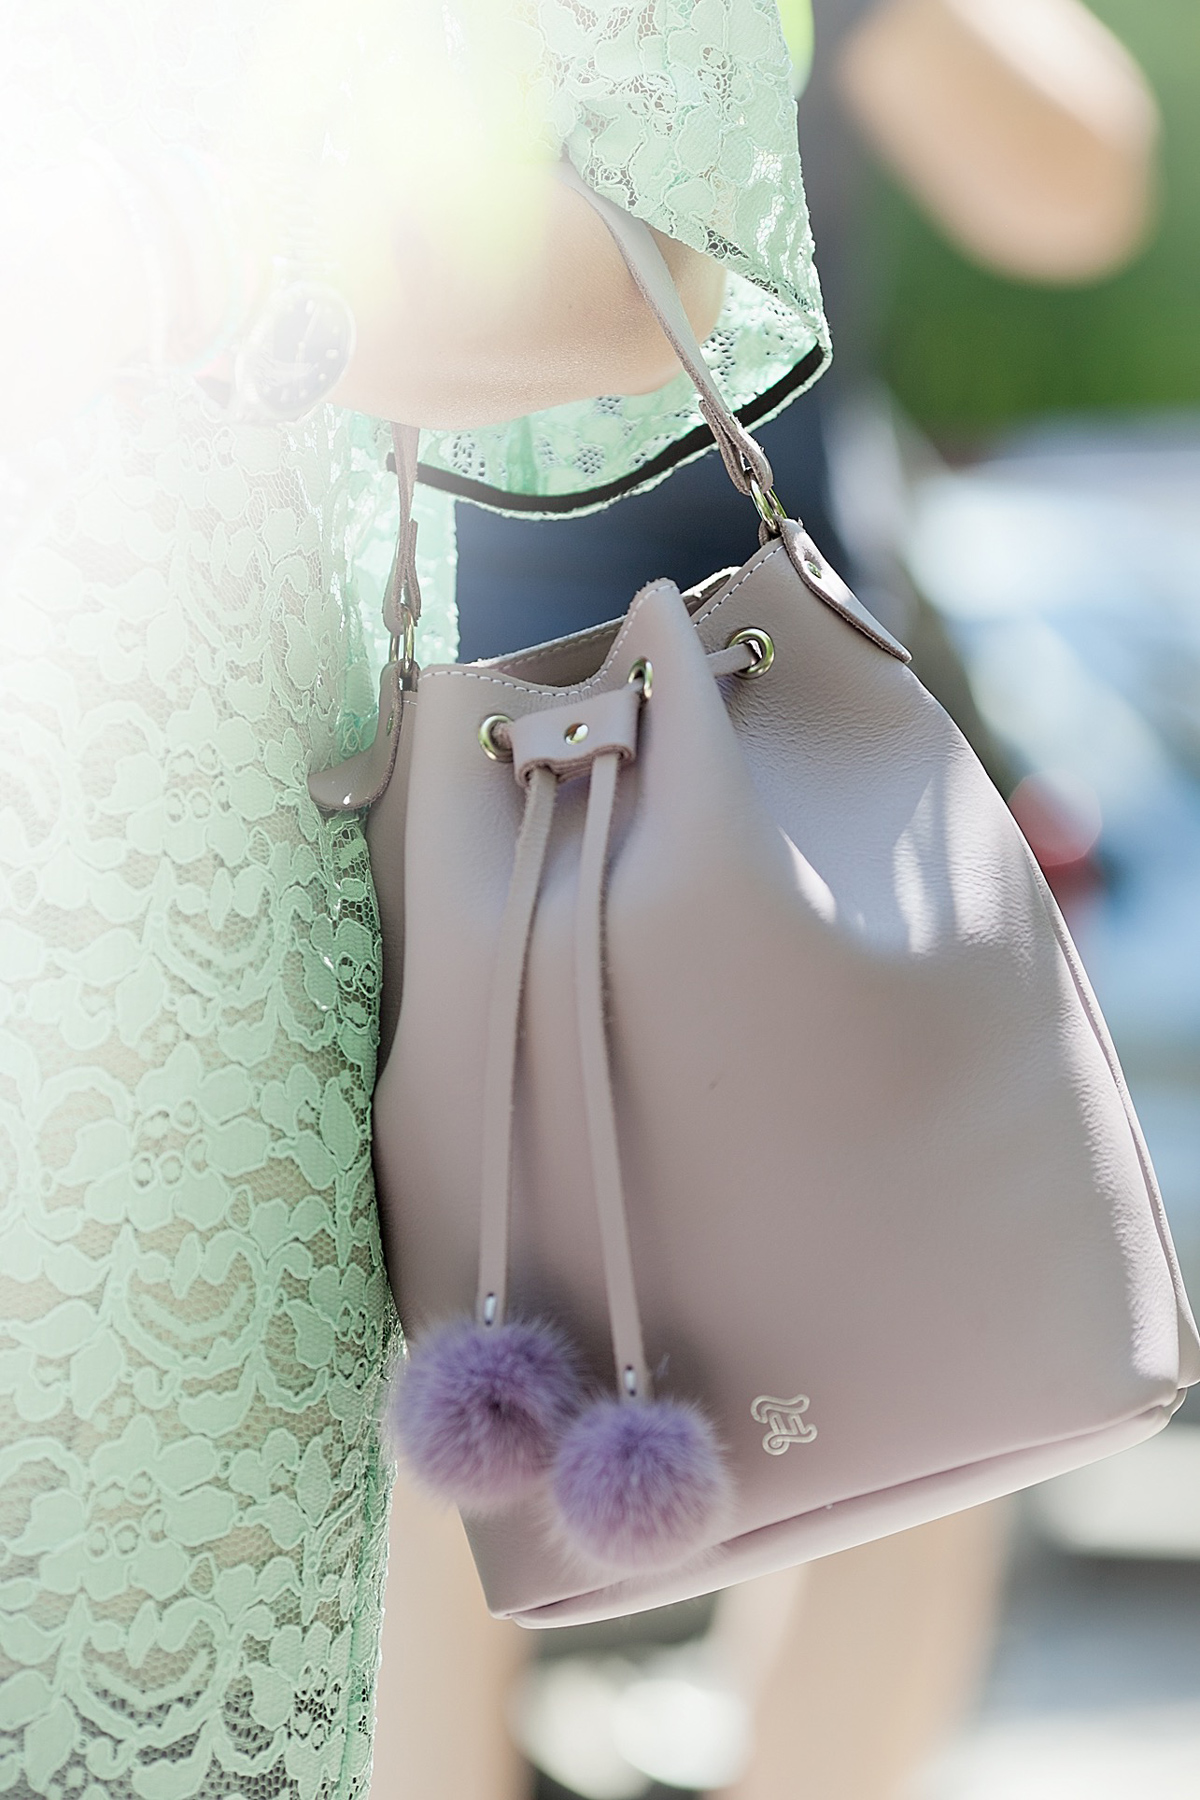 grafea-lilac-bucket-bag-komono-silver-mirrored-sunglasses-on-galant-girl-fashion-street-style-blogger-runet